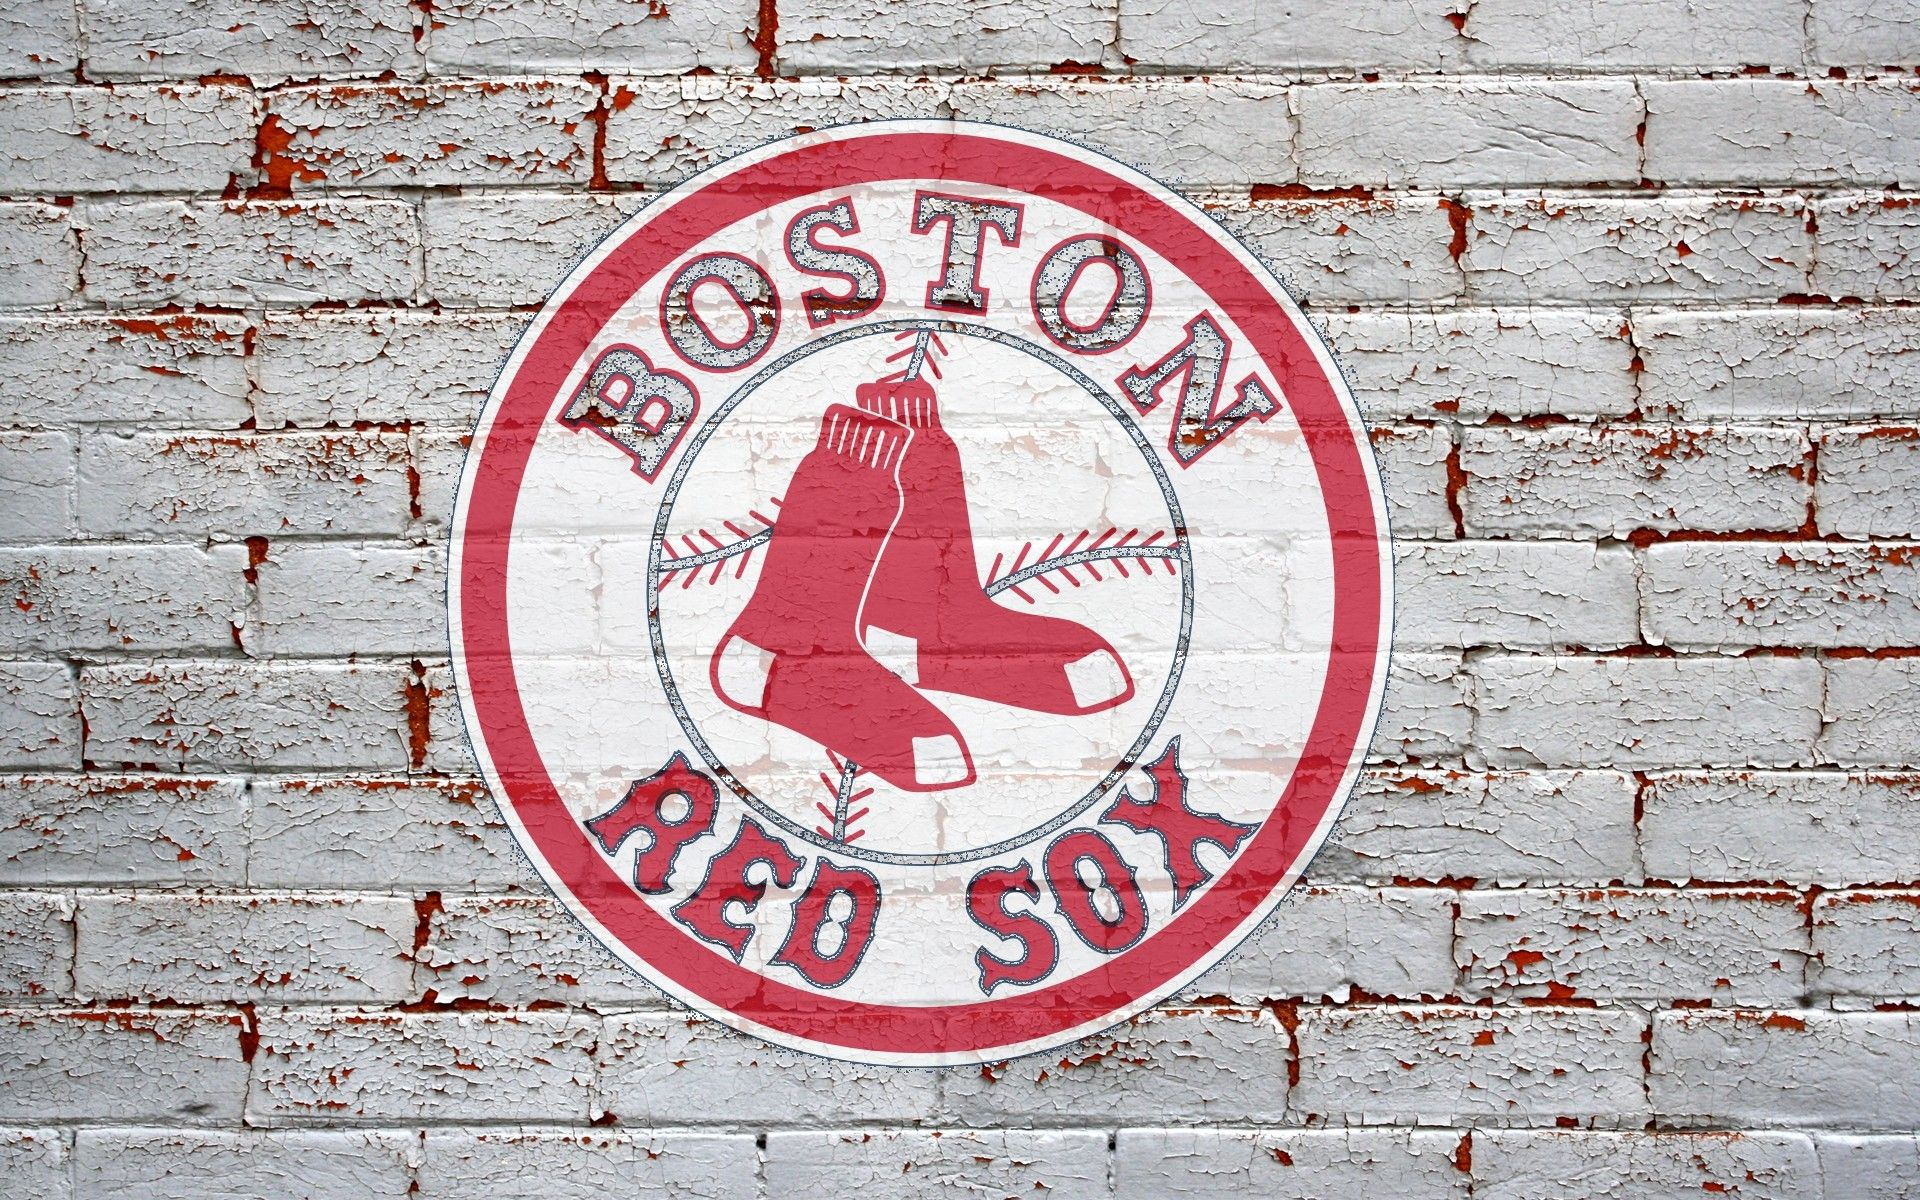 1920x1200 Boston Red Sox wallpaper | Boston red sox wallpaper, Red sox wallpaper, Red sox iphone wallpaper